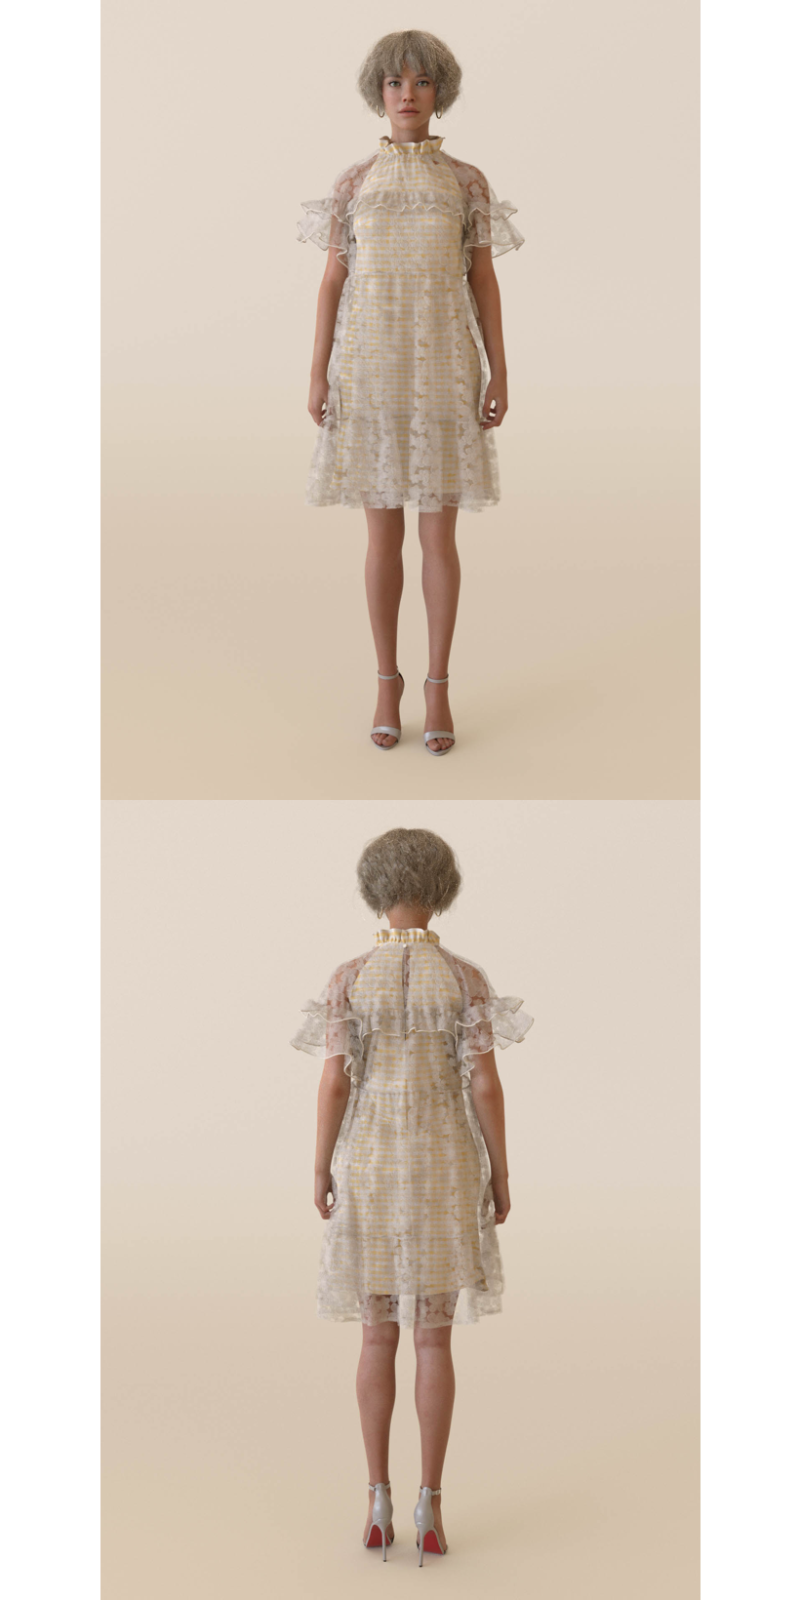 Ulla Embroidered Dress - Customer's Product with price 429.00 ID _afqHky1Ury4gEJRtTVm5rAJ